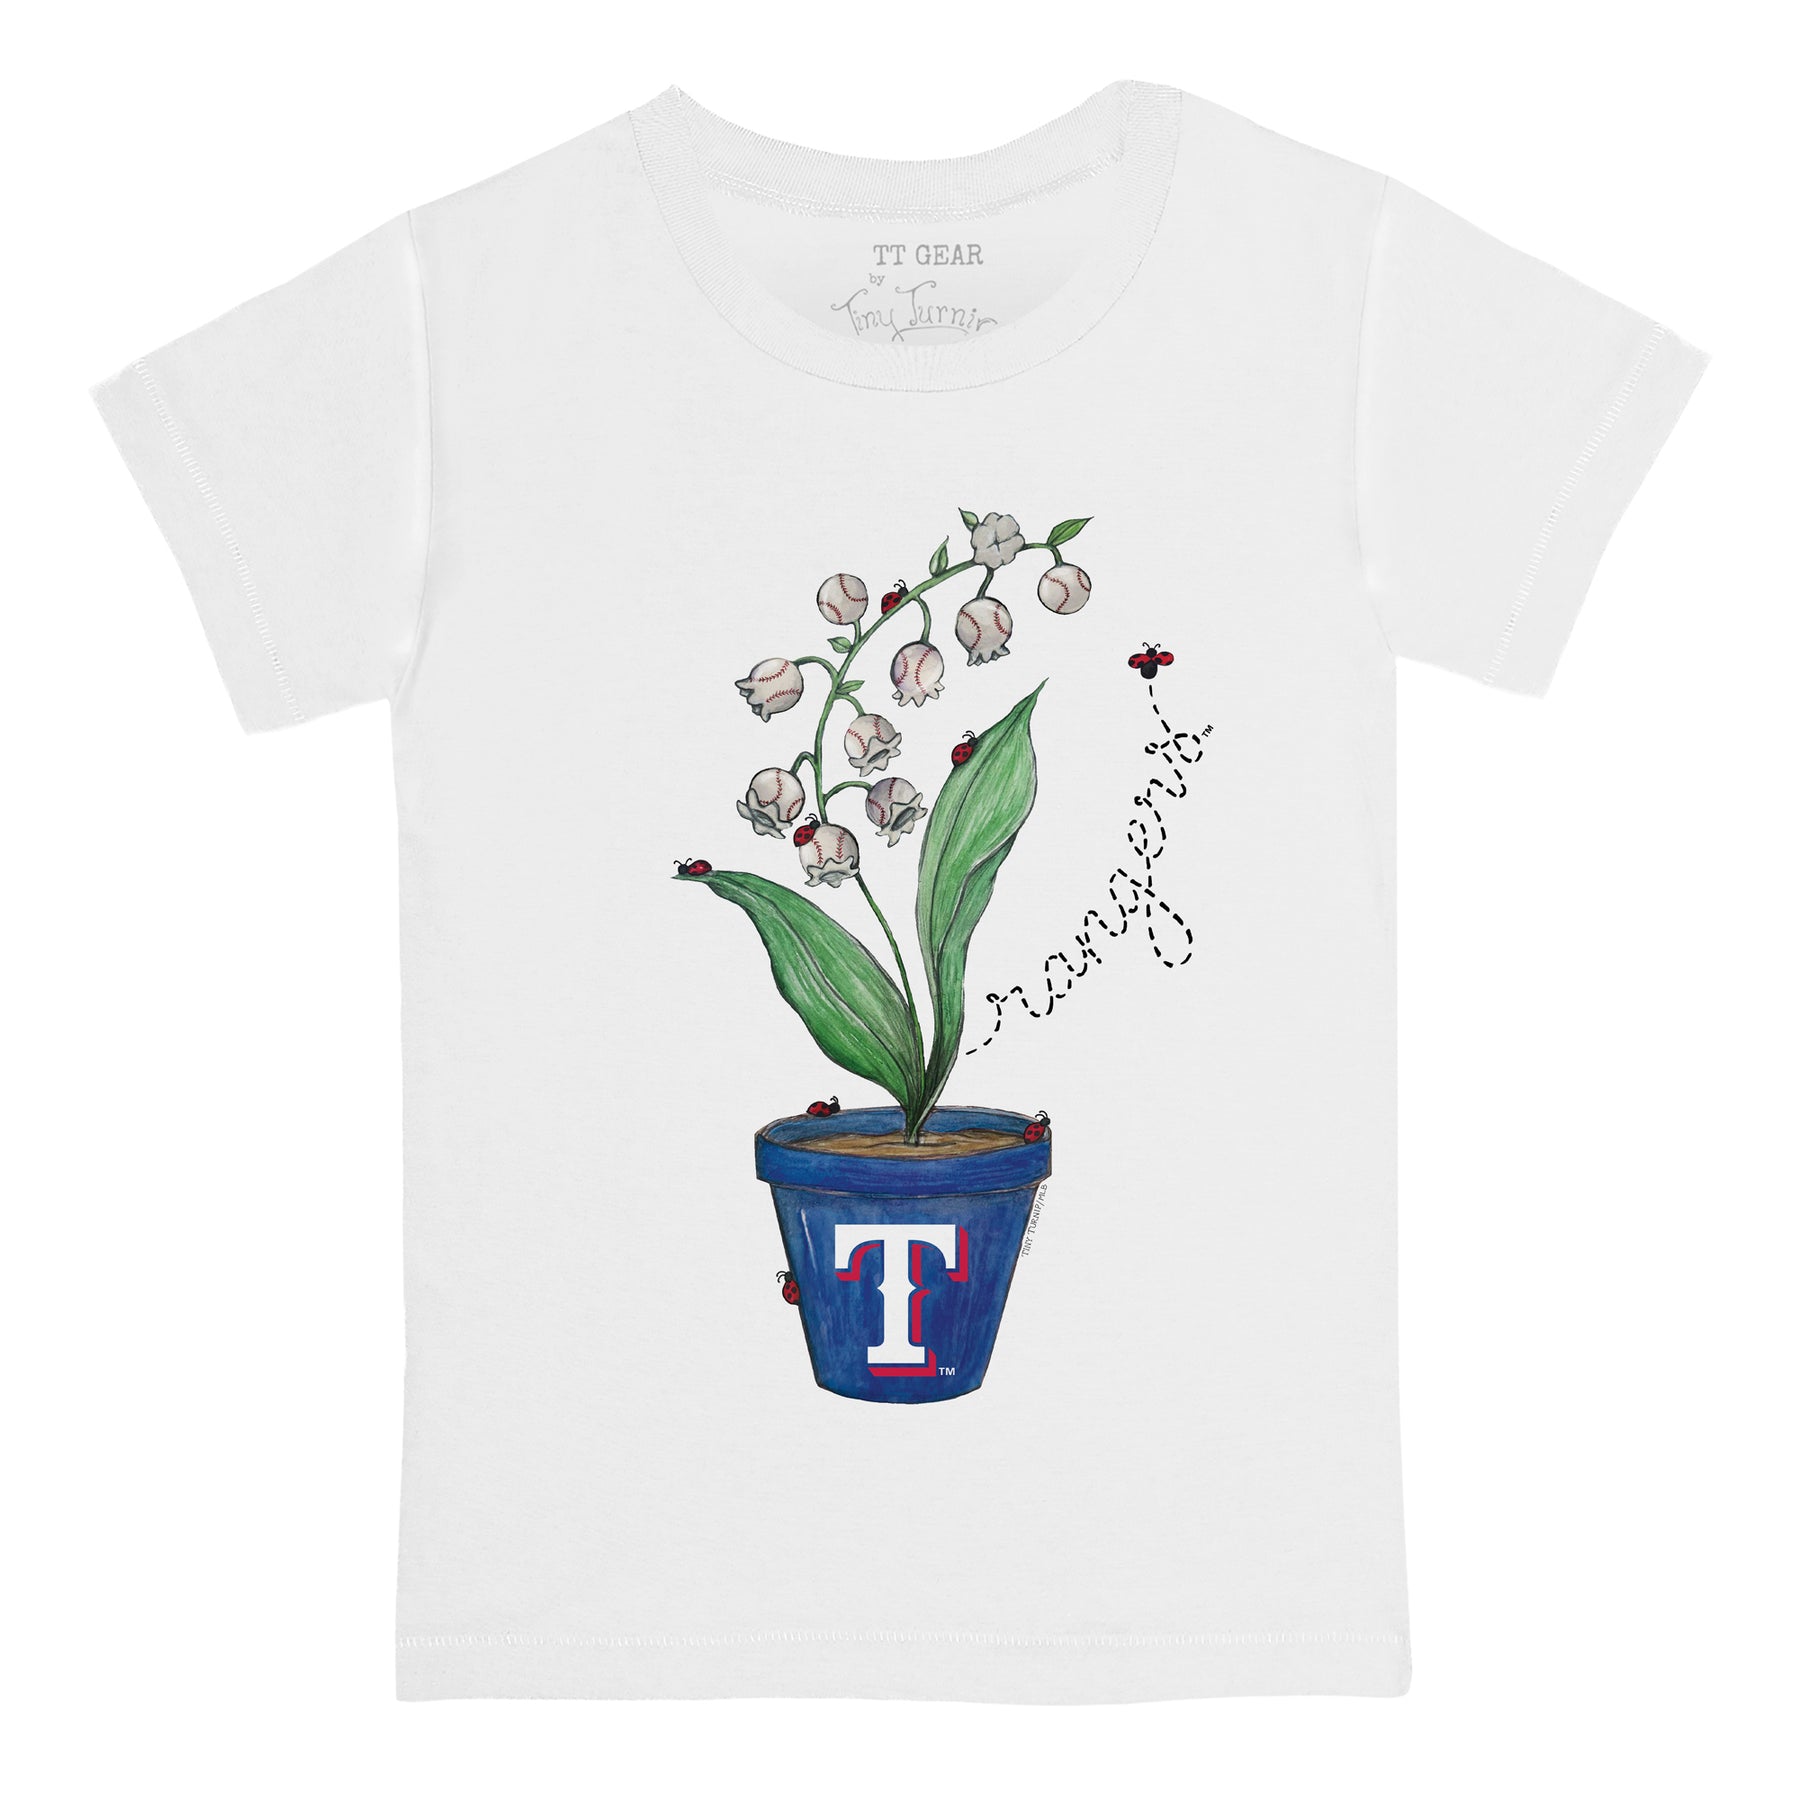 Texas Rangers Ladybug Tee Shirt